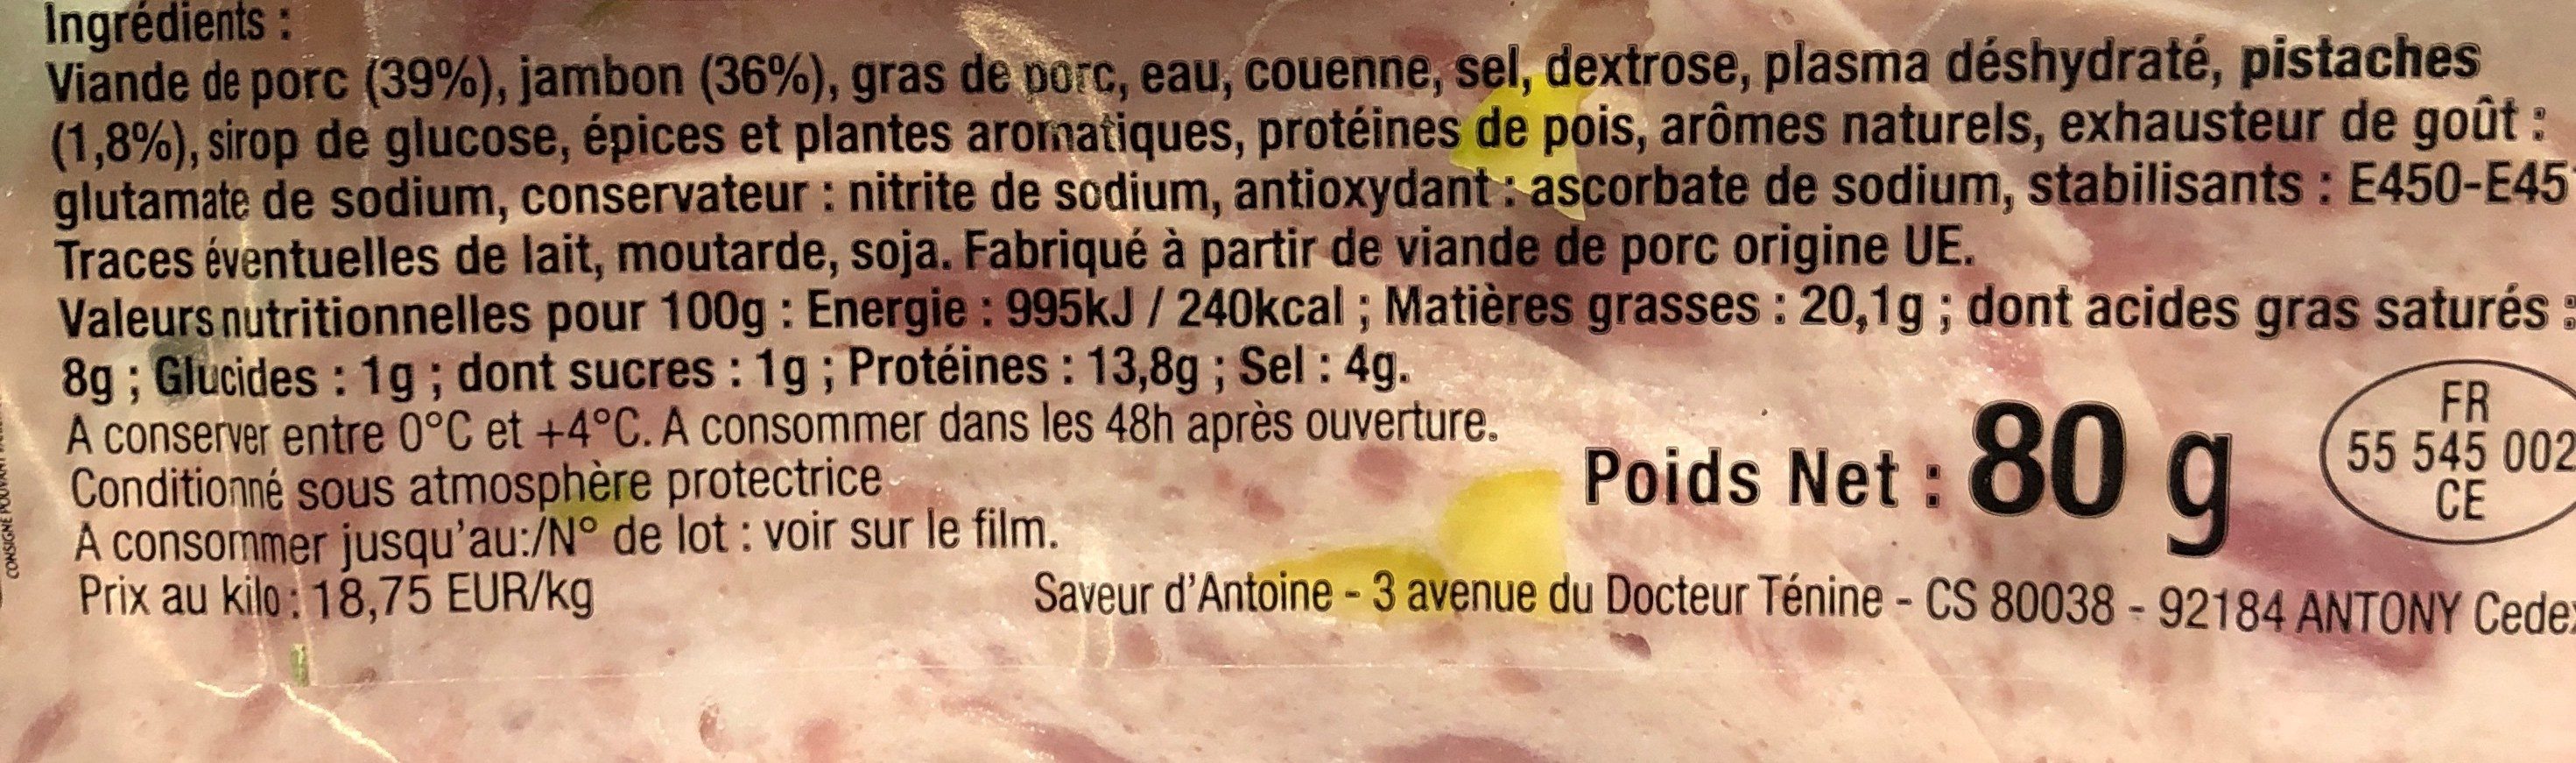 Roulade au jambon pistachee - Ingrédients